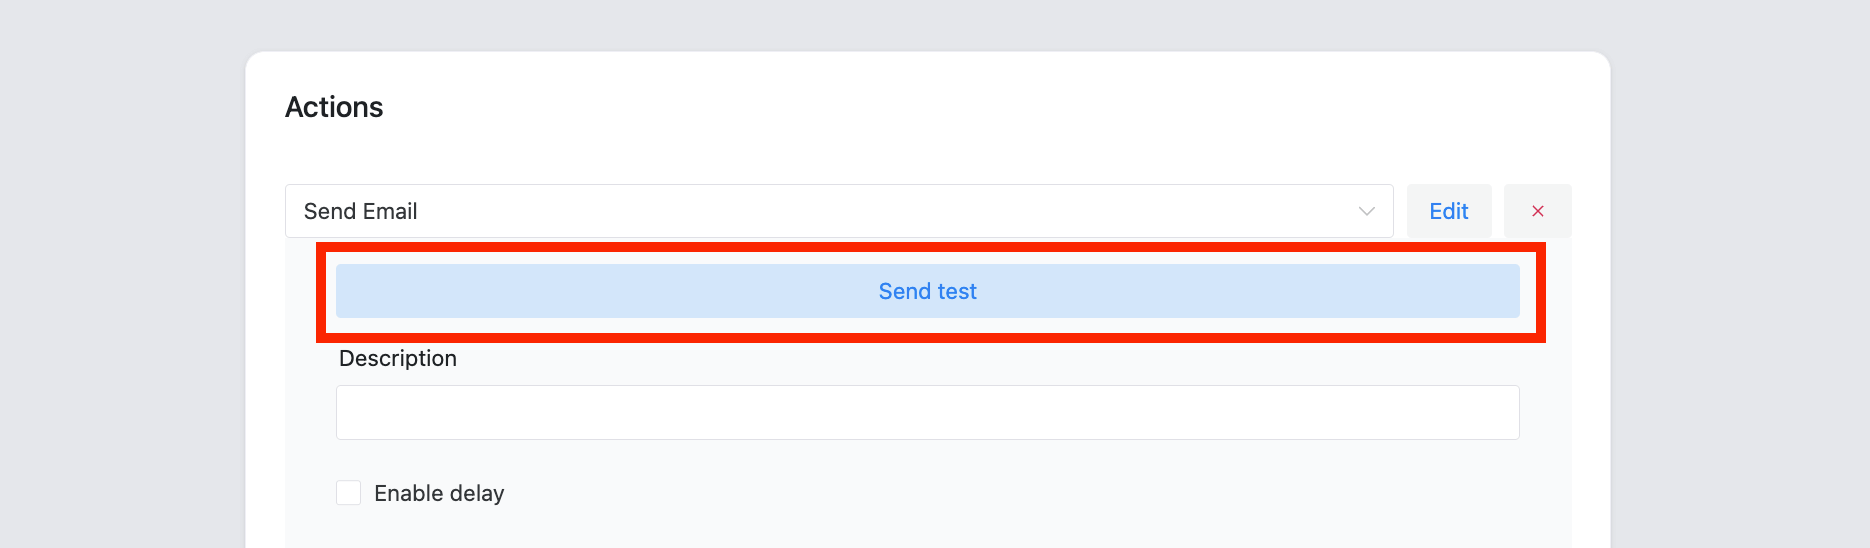 ShopMagic send test feature